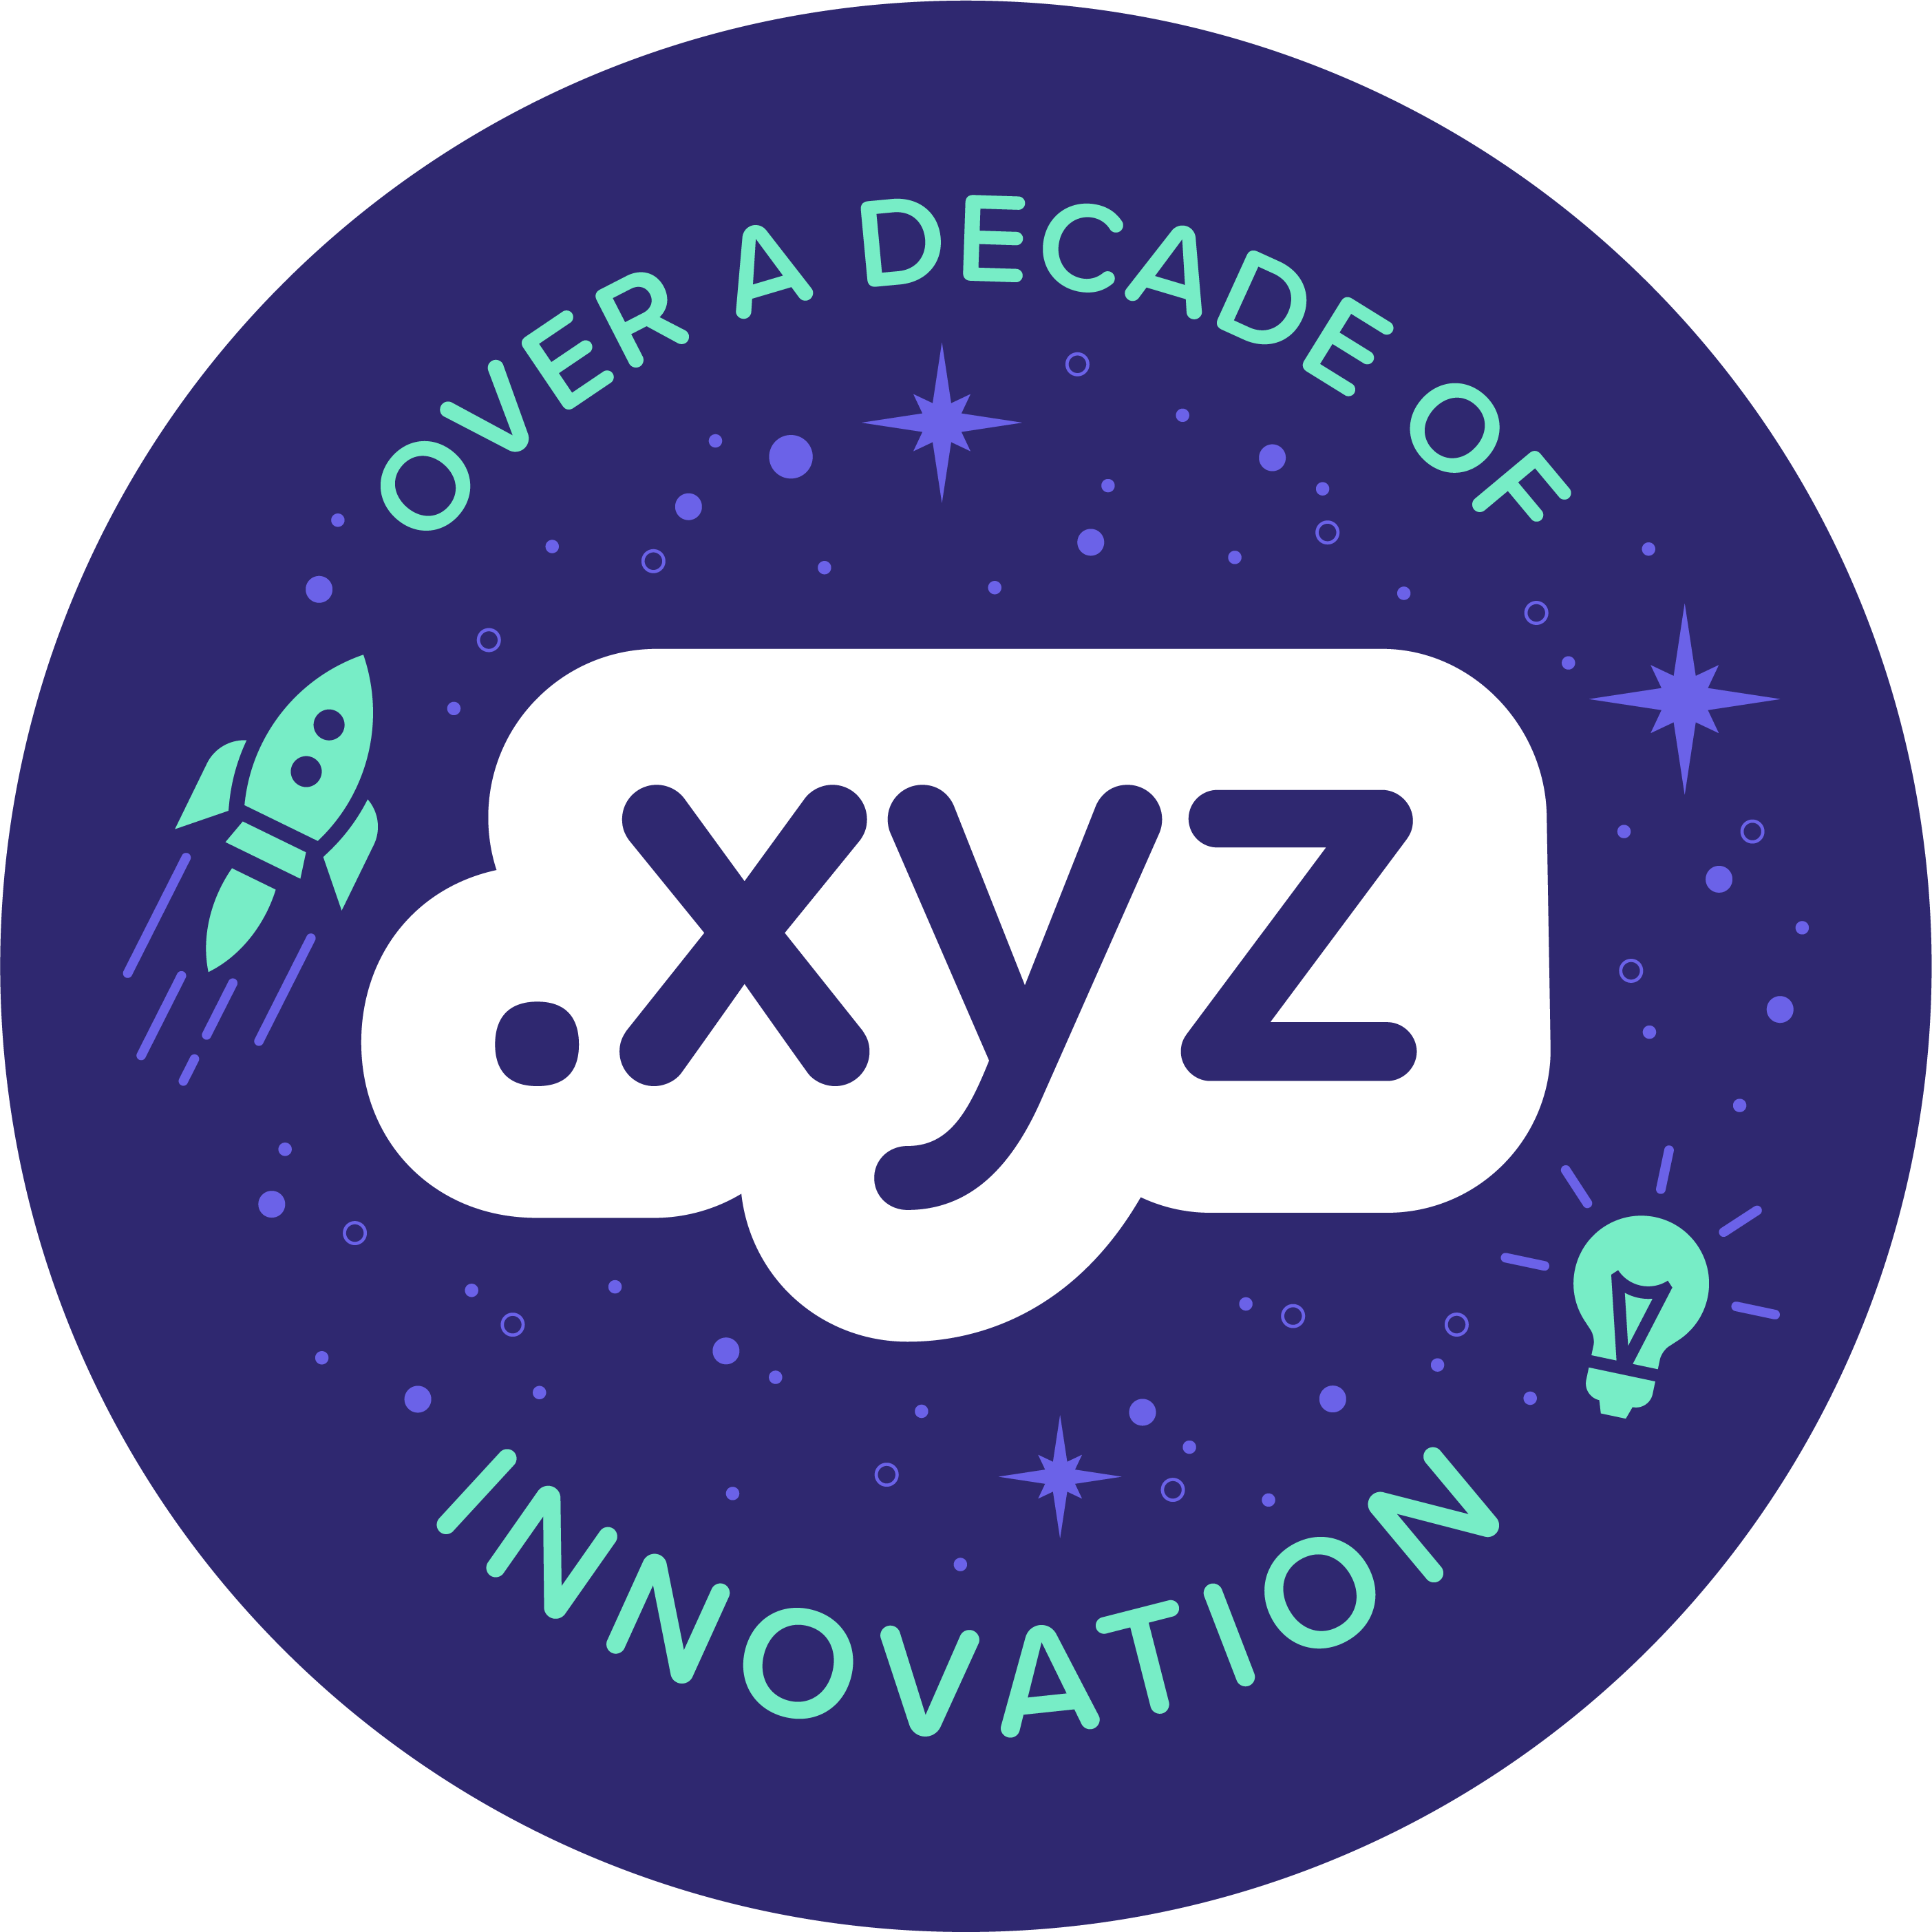 XYZ Registry Celebrates a Decade of Innovation